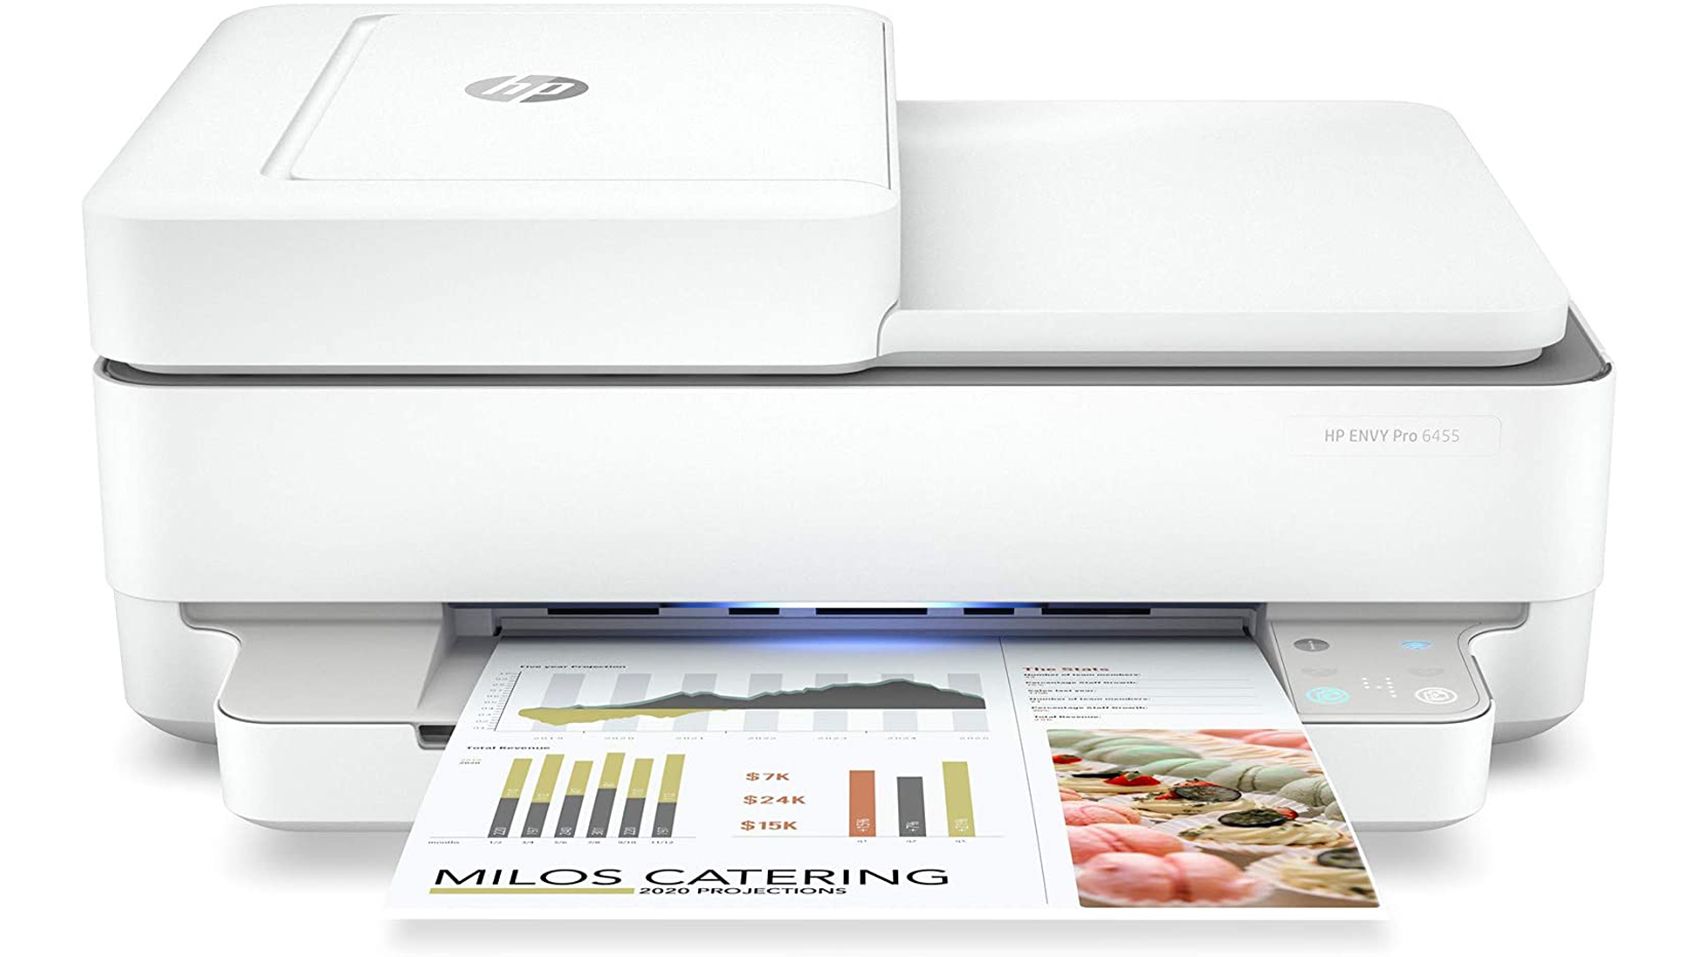 2020 New Technology Digital Nail Art Printer Professional Printing